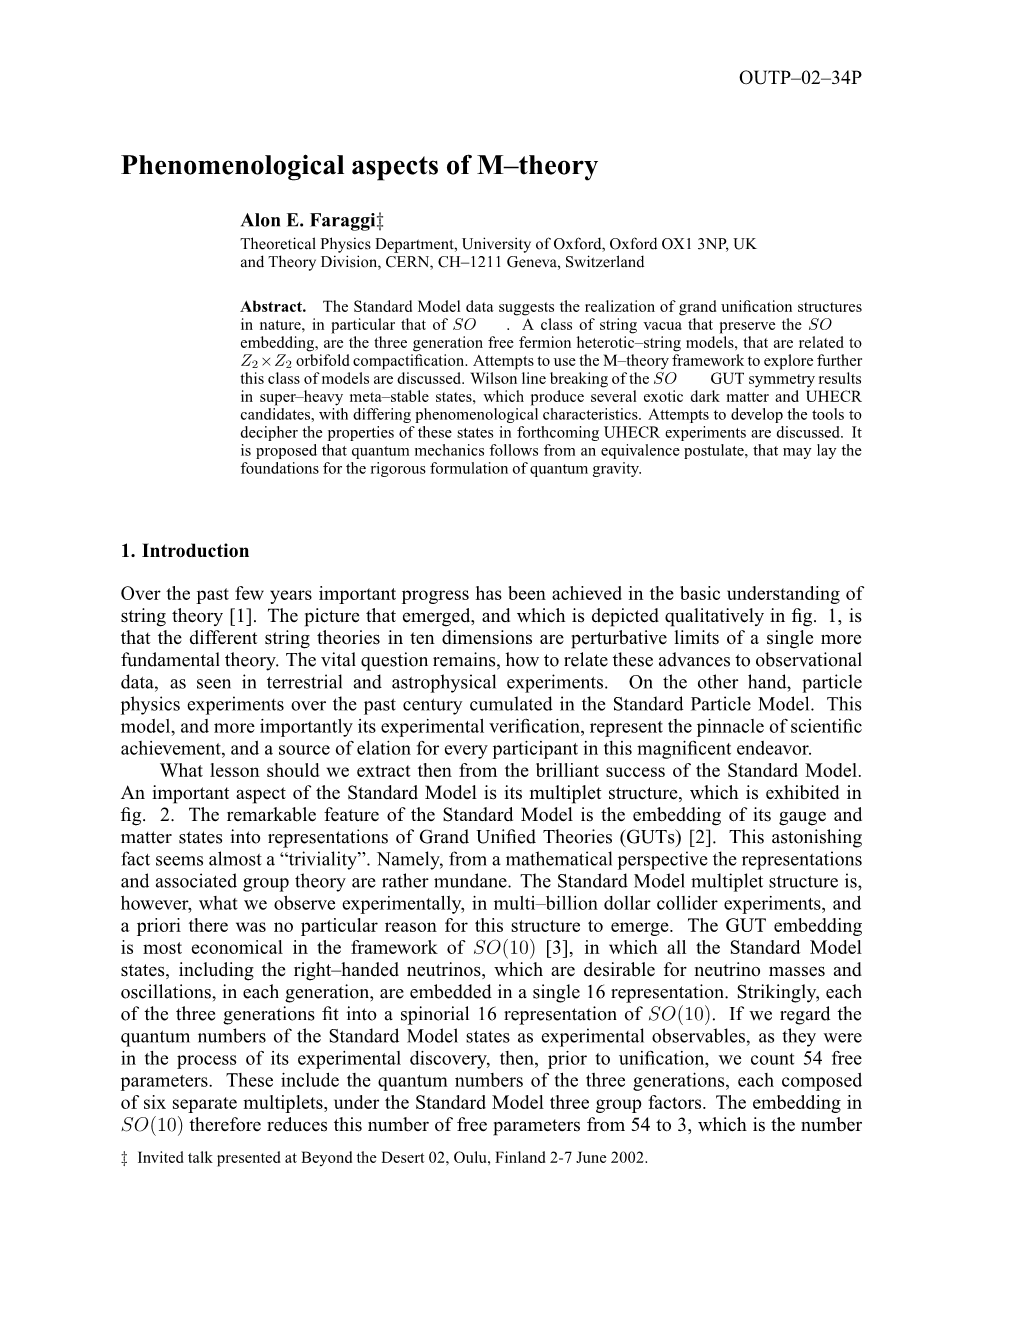 Phenomenological Aspects of M–Theory